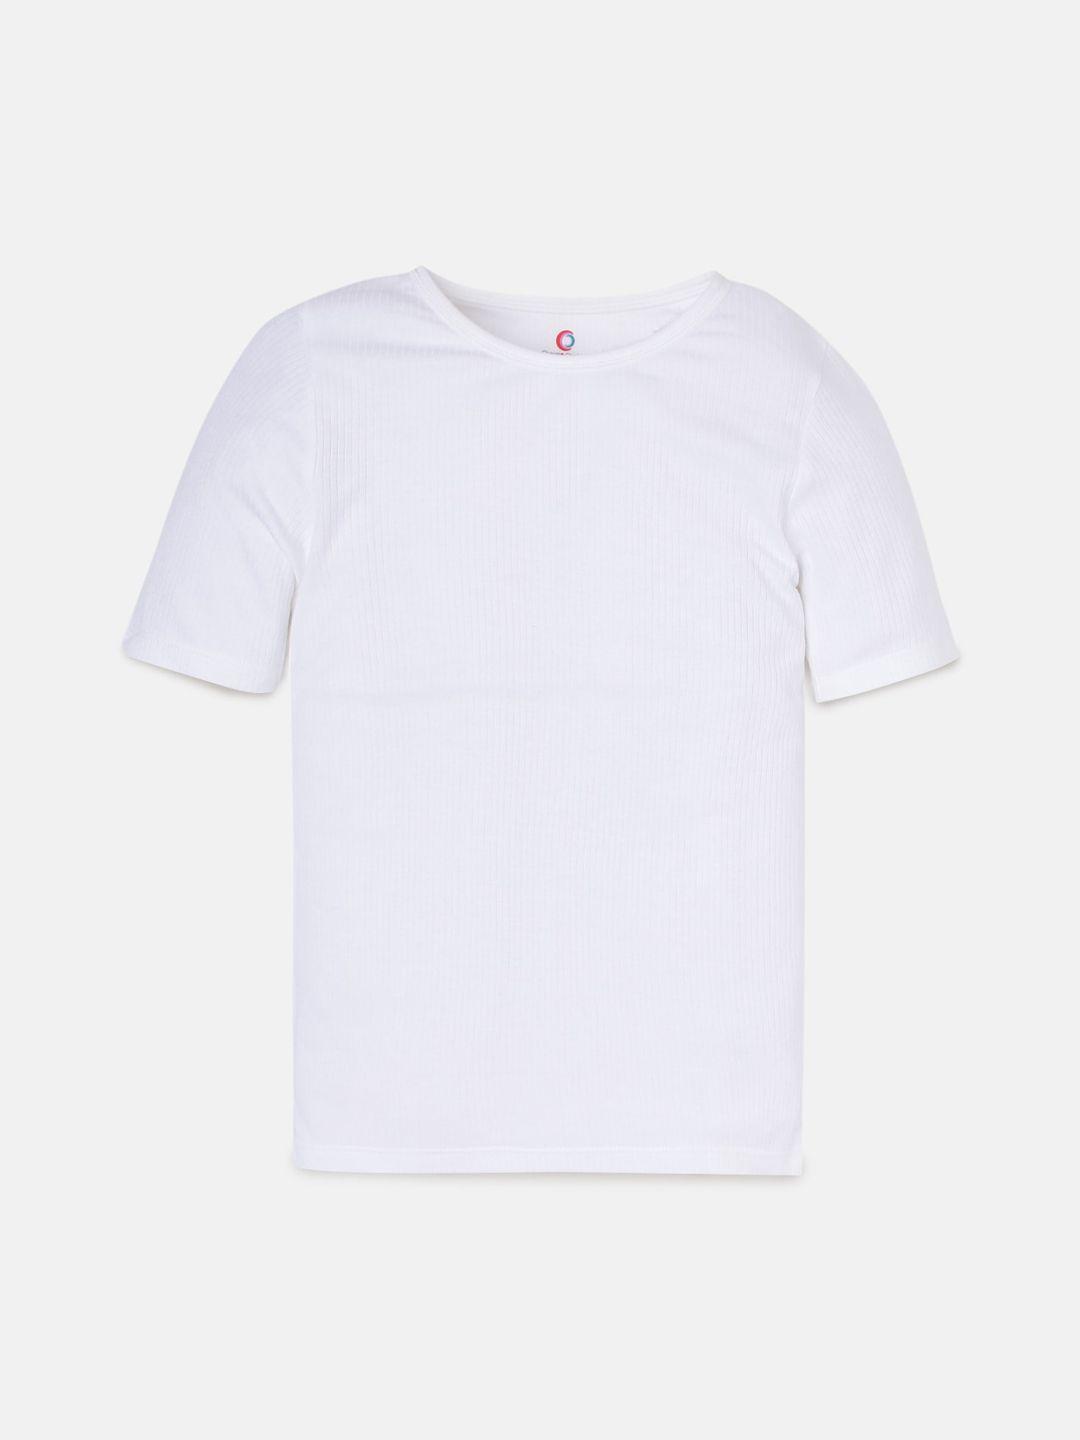 charm-n-cherish-unisex-kids-white-solid-thermal-t-shirt